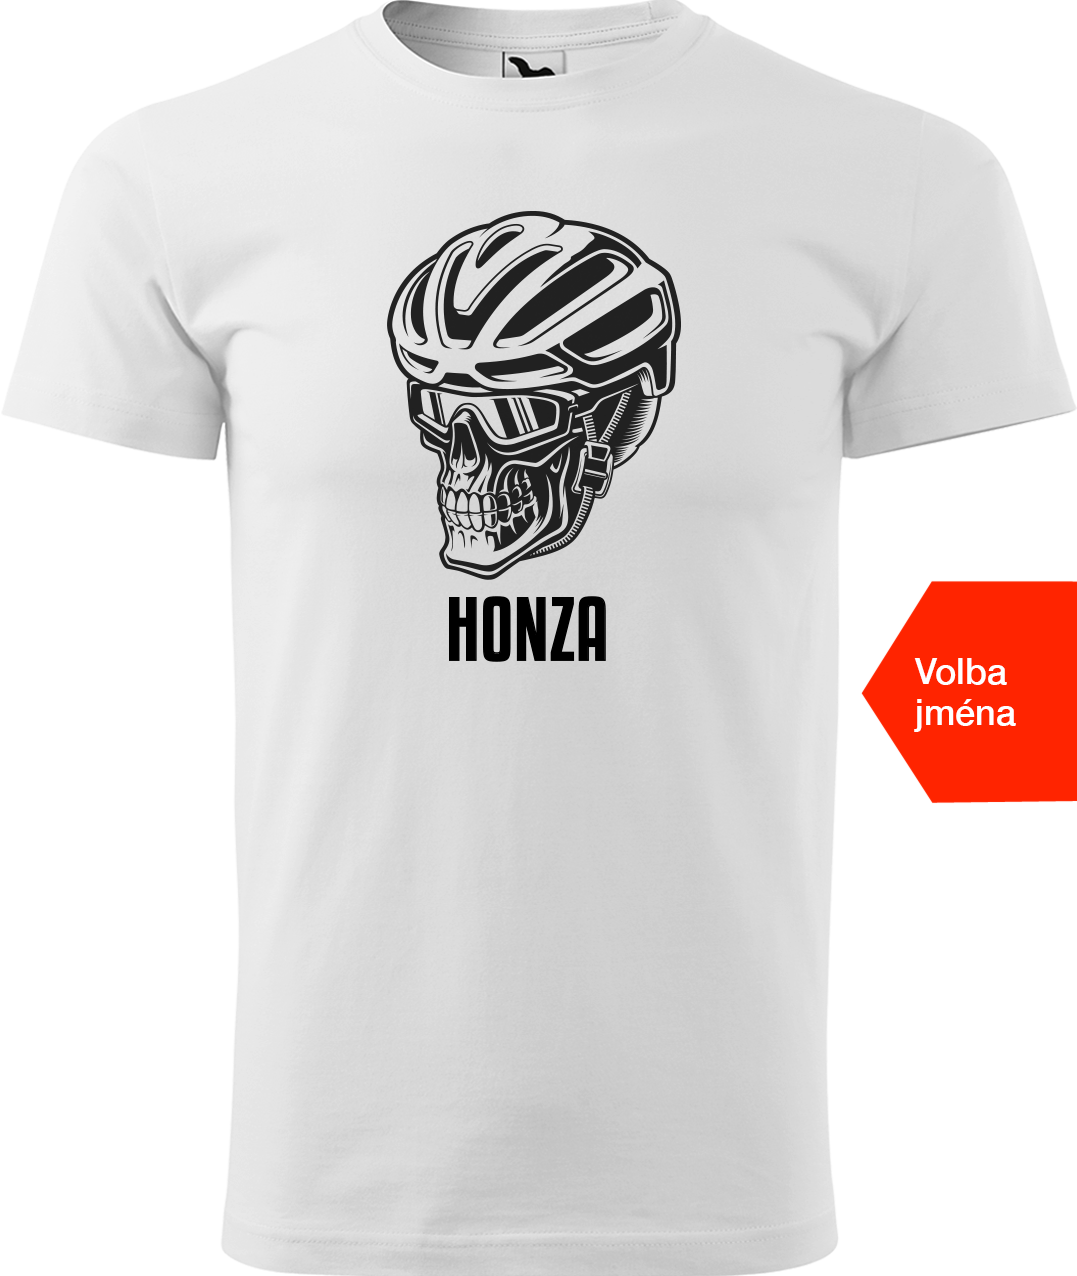 Pánské tričko pro cyklistu se jménem - Lebka v helmě Velikost: 3XL, Barva: Bílá (00)